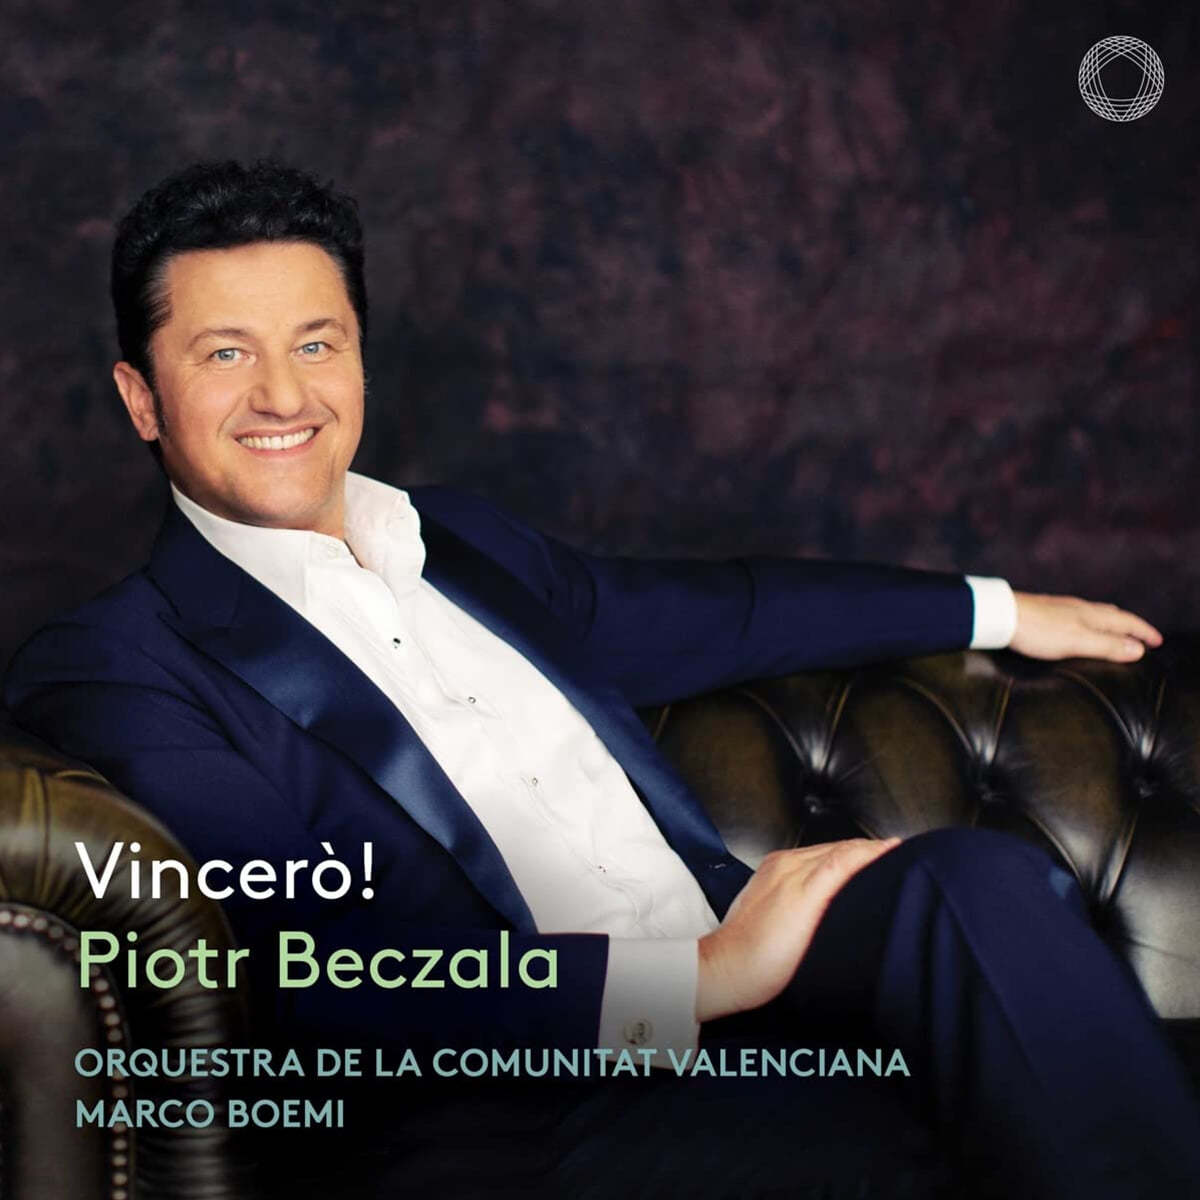 Piotr Beczala 베찰라가 부르는 오페라 테너 아리아 (Vincero!) 